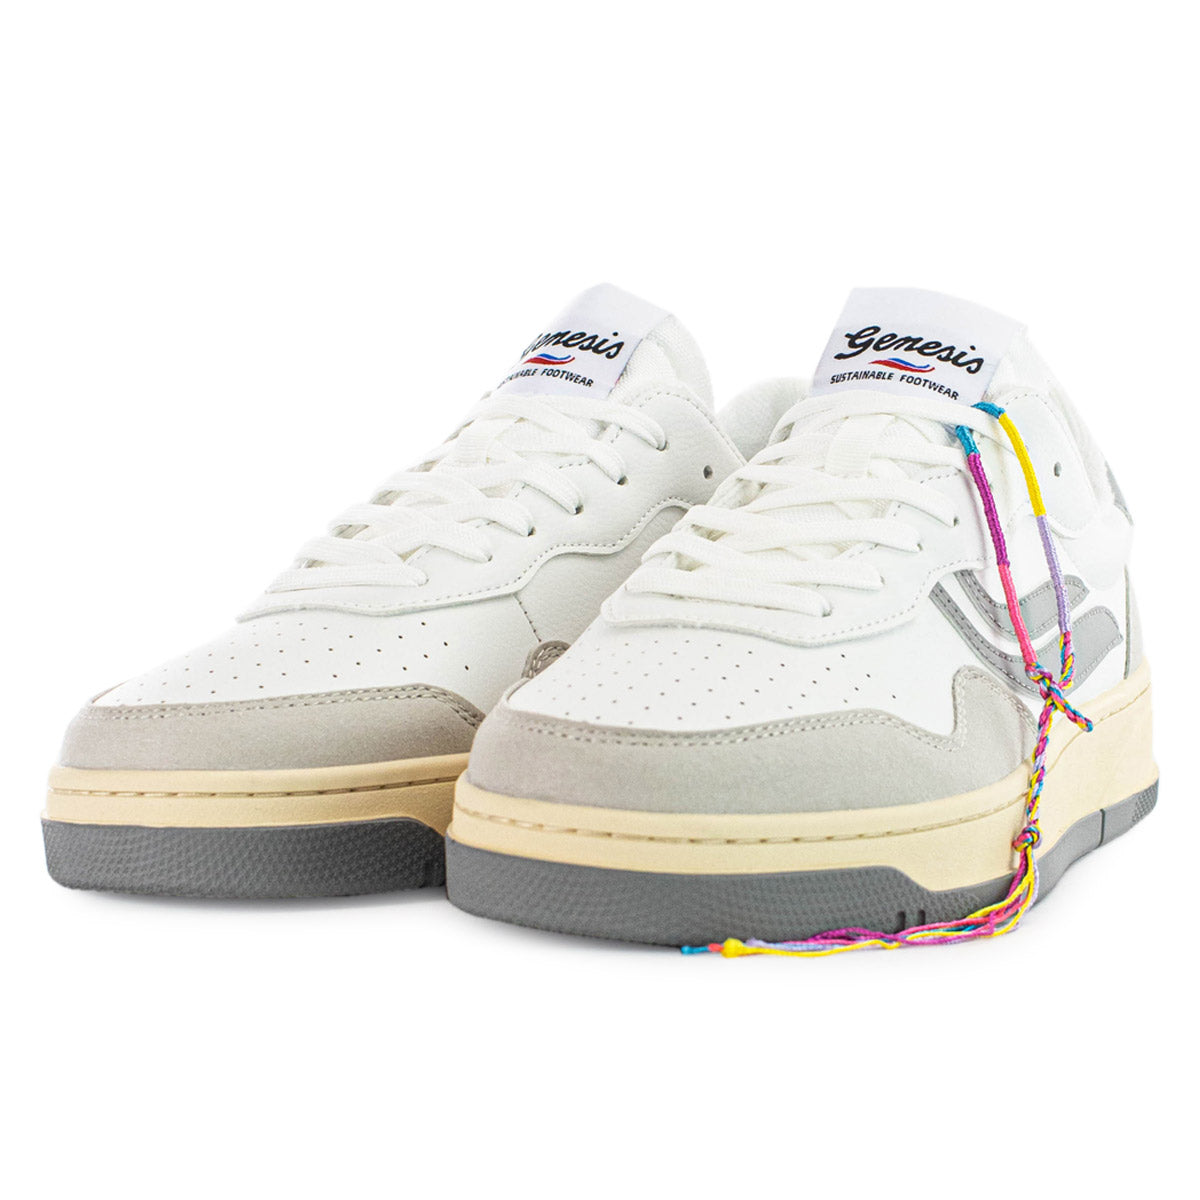 Sneaker Modell: G-Soley 2.0 Sugar Pina Offwhite/White/Grey